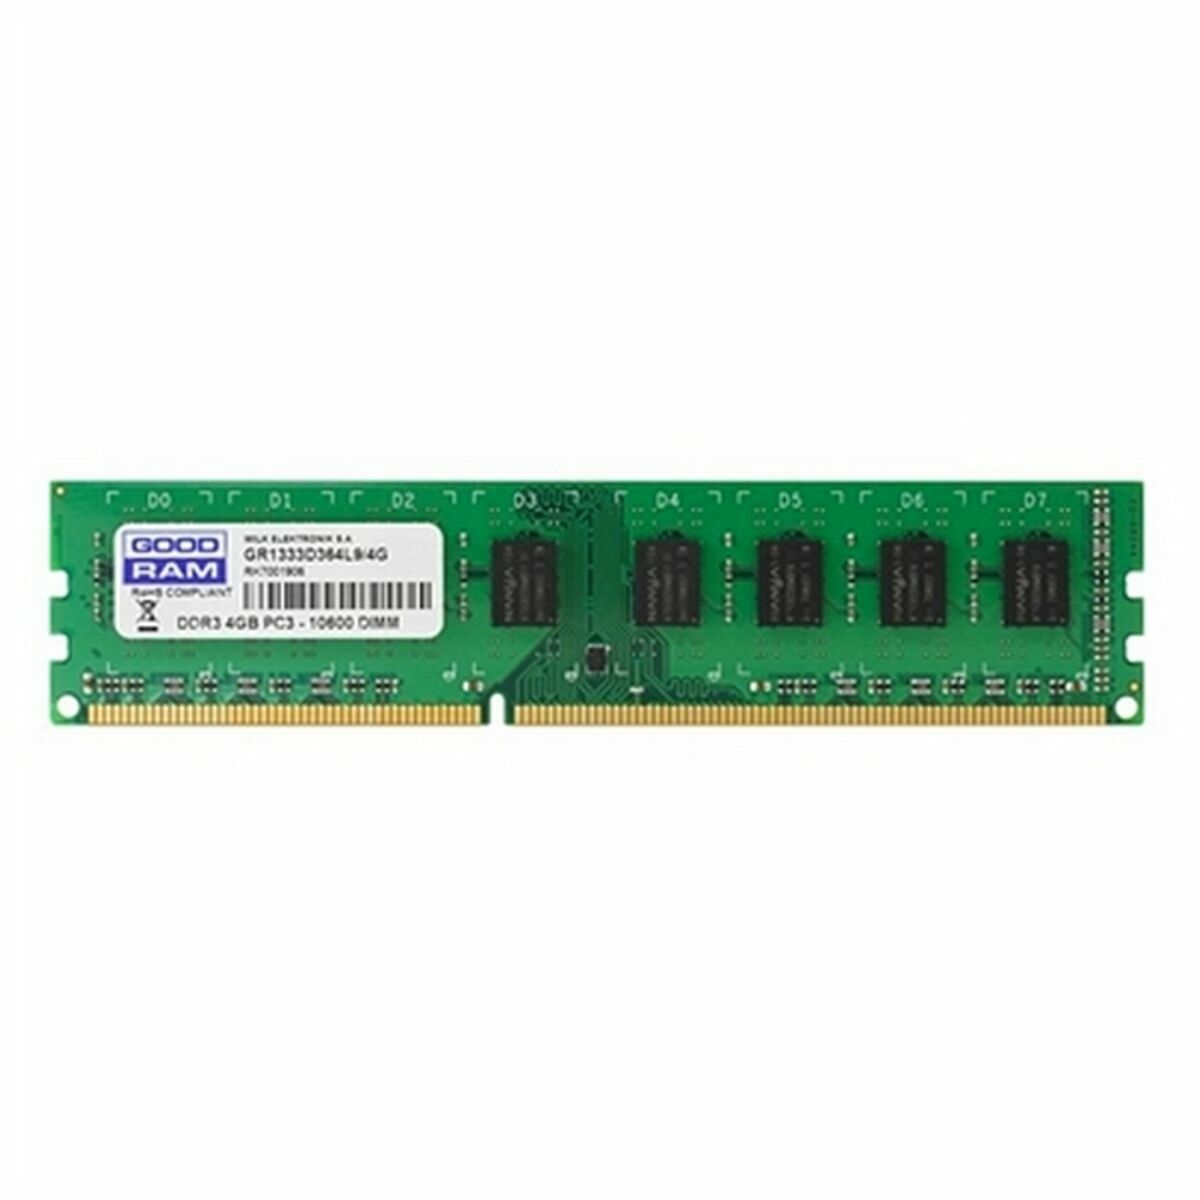 Osta tuote RAM-muisti GoodRam 8GB DDR3 8 GB DDR3 8 GB DDR3 SDRAM verkkokaupastamme Korhone: Tietokoneet & Elektroniikka 20% alennuksella koodilla VIIKONLOPPU